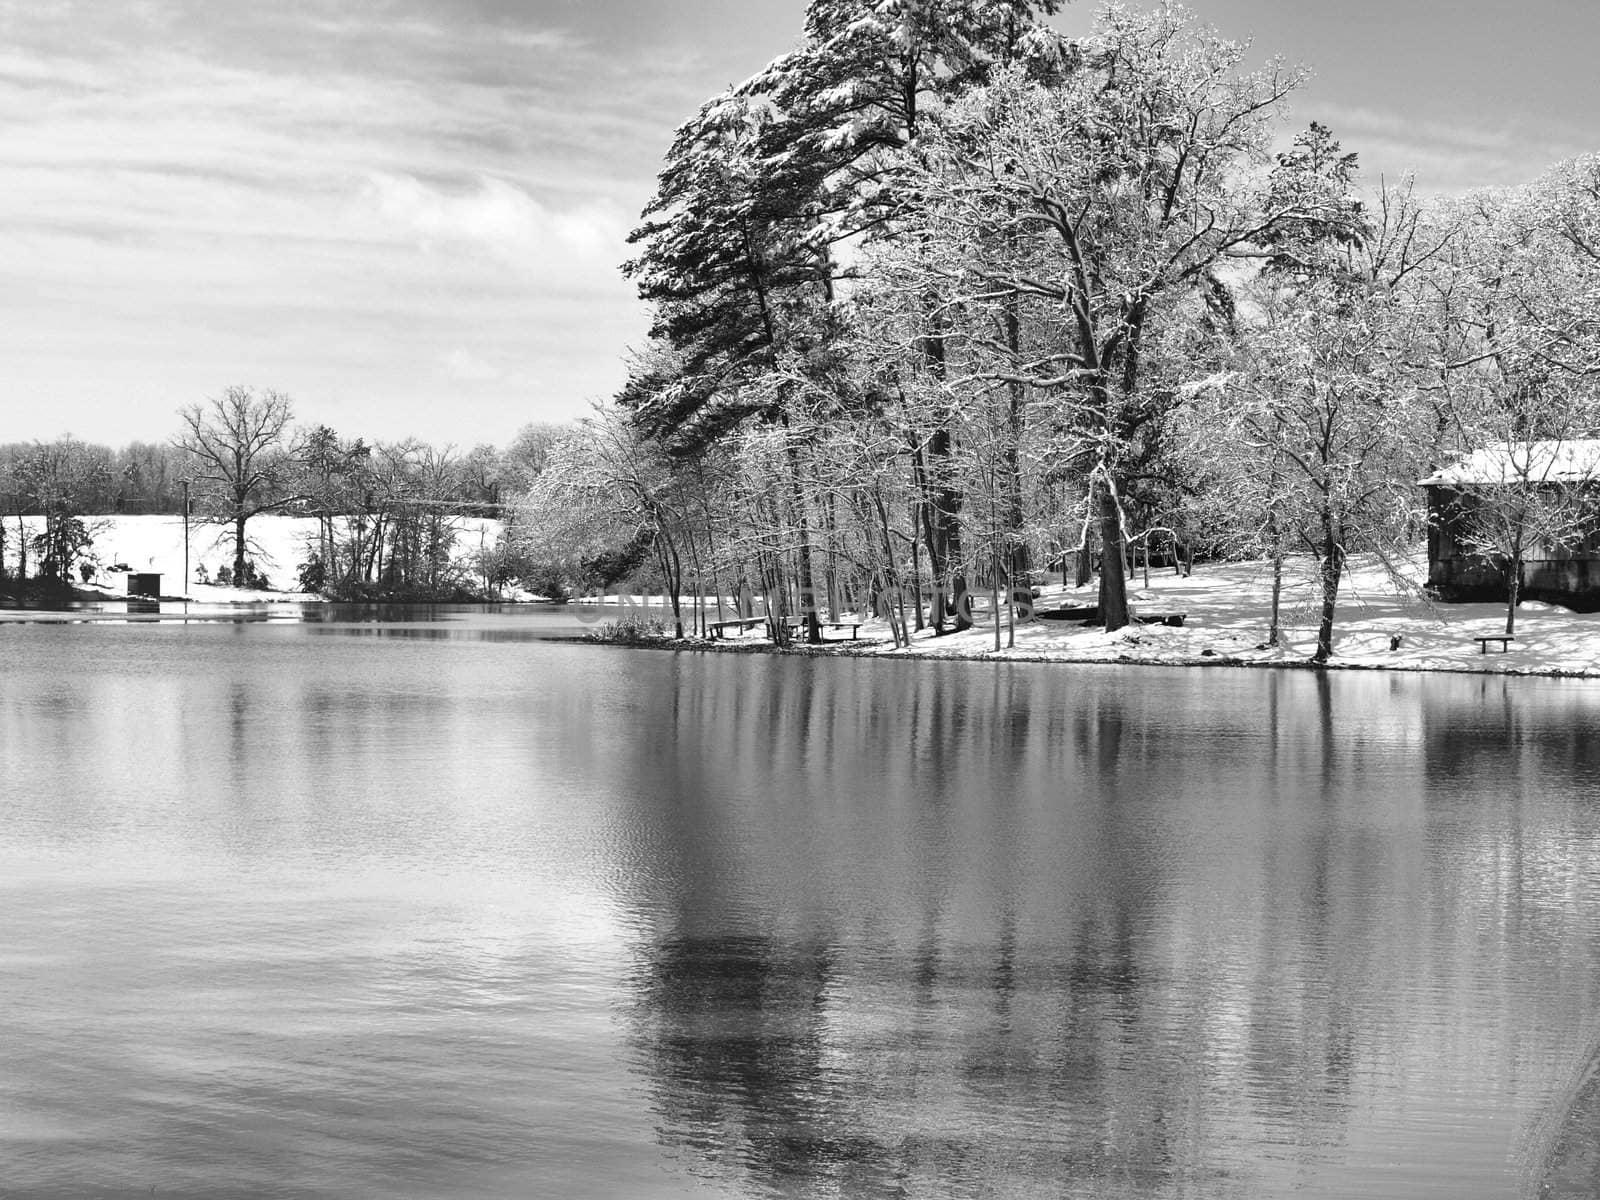 a rural lake in North Carolina after a snow fall